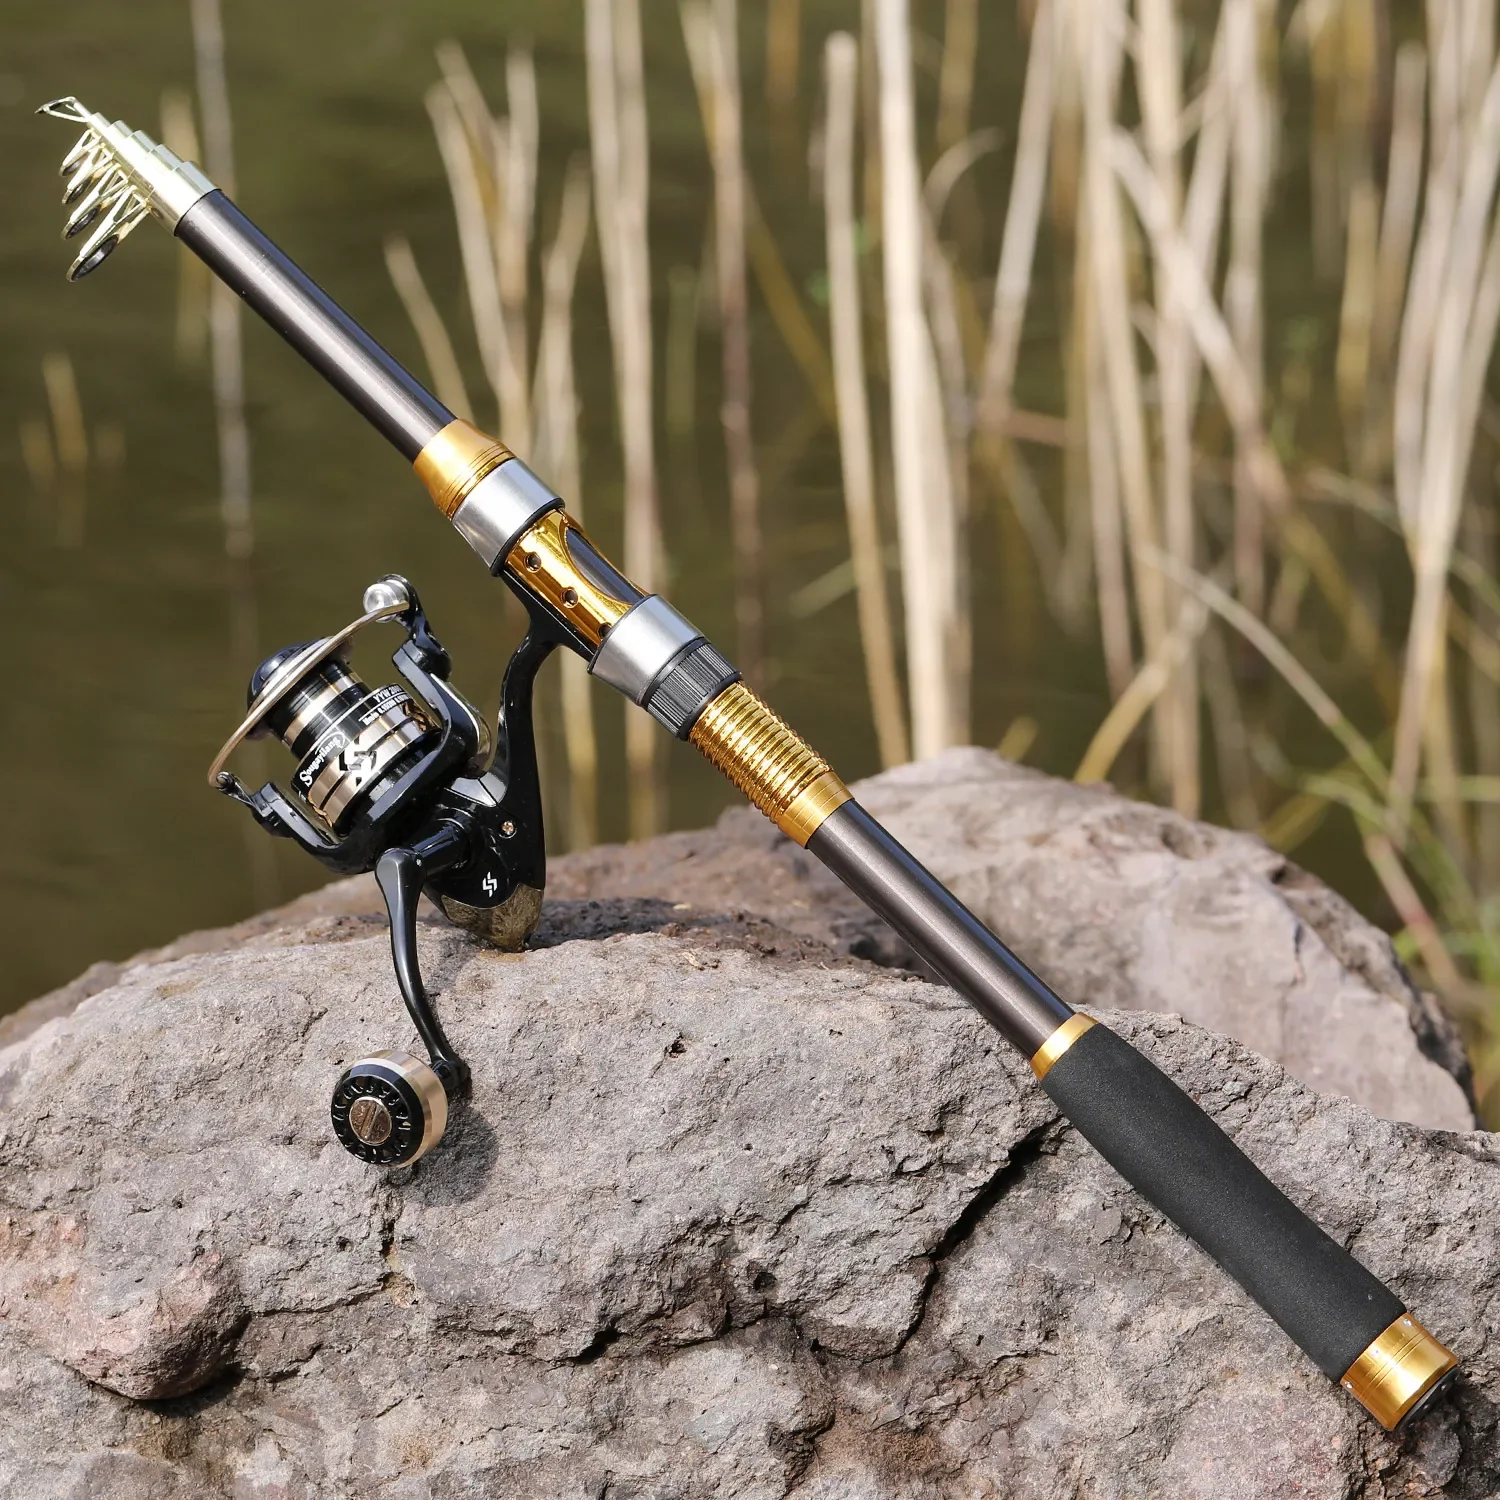 https://ae01.alicdn.com/kf/Sd579d6d508cf44bbb4eab24da769a831R/Sougayilang-Telescopic-Fishing-Rod-and-Spinning-Fishing-Reel-Combo-Saltwater-Freshwater-Carp-Portable-for-Travel-Fishing.jpg